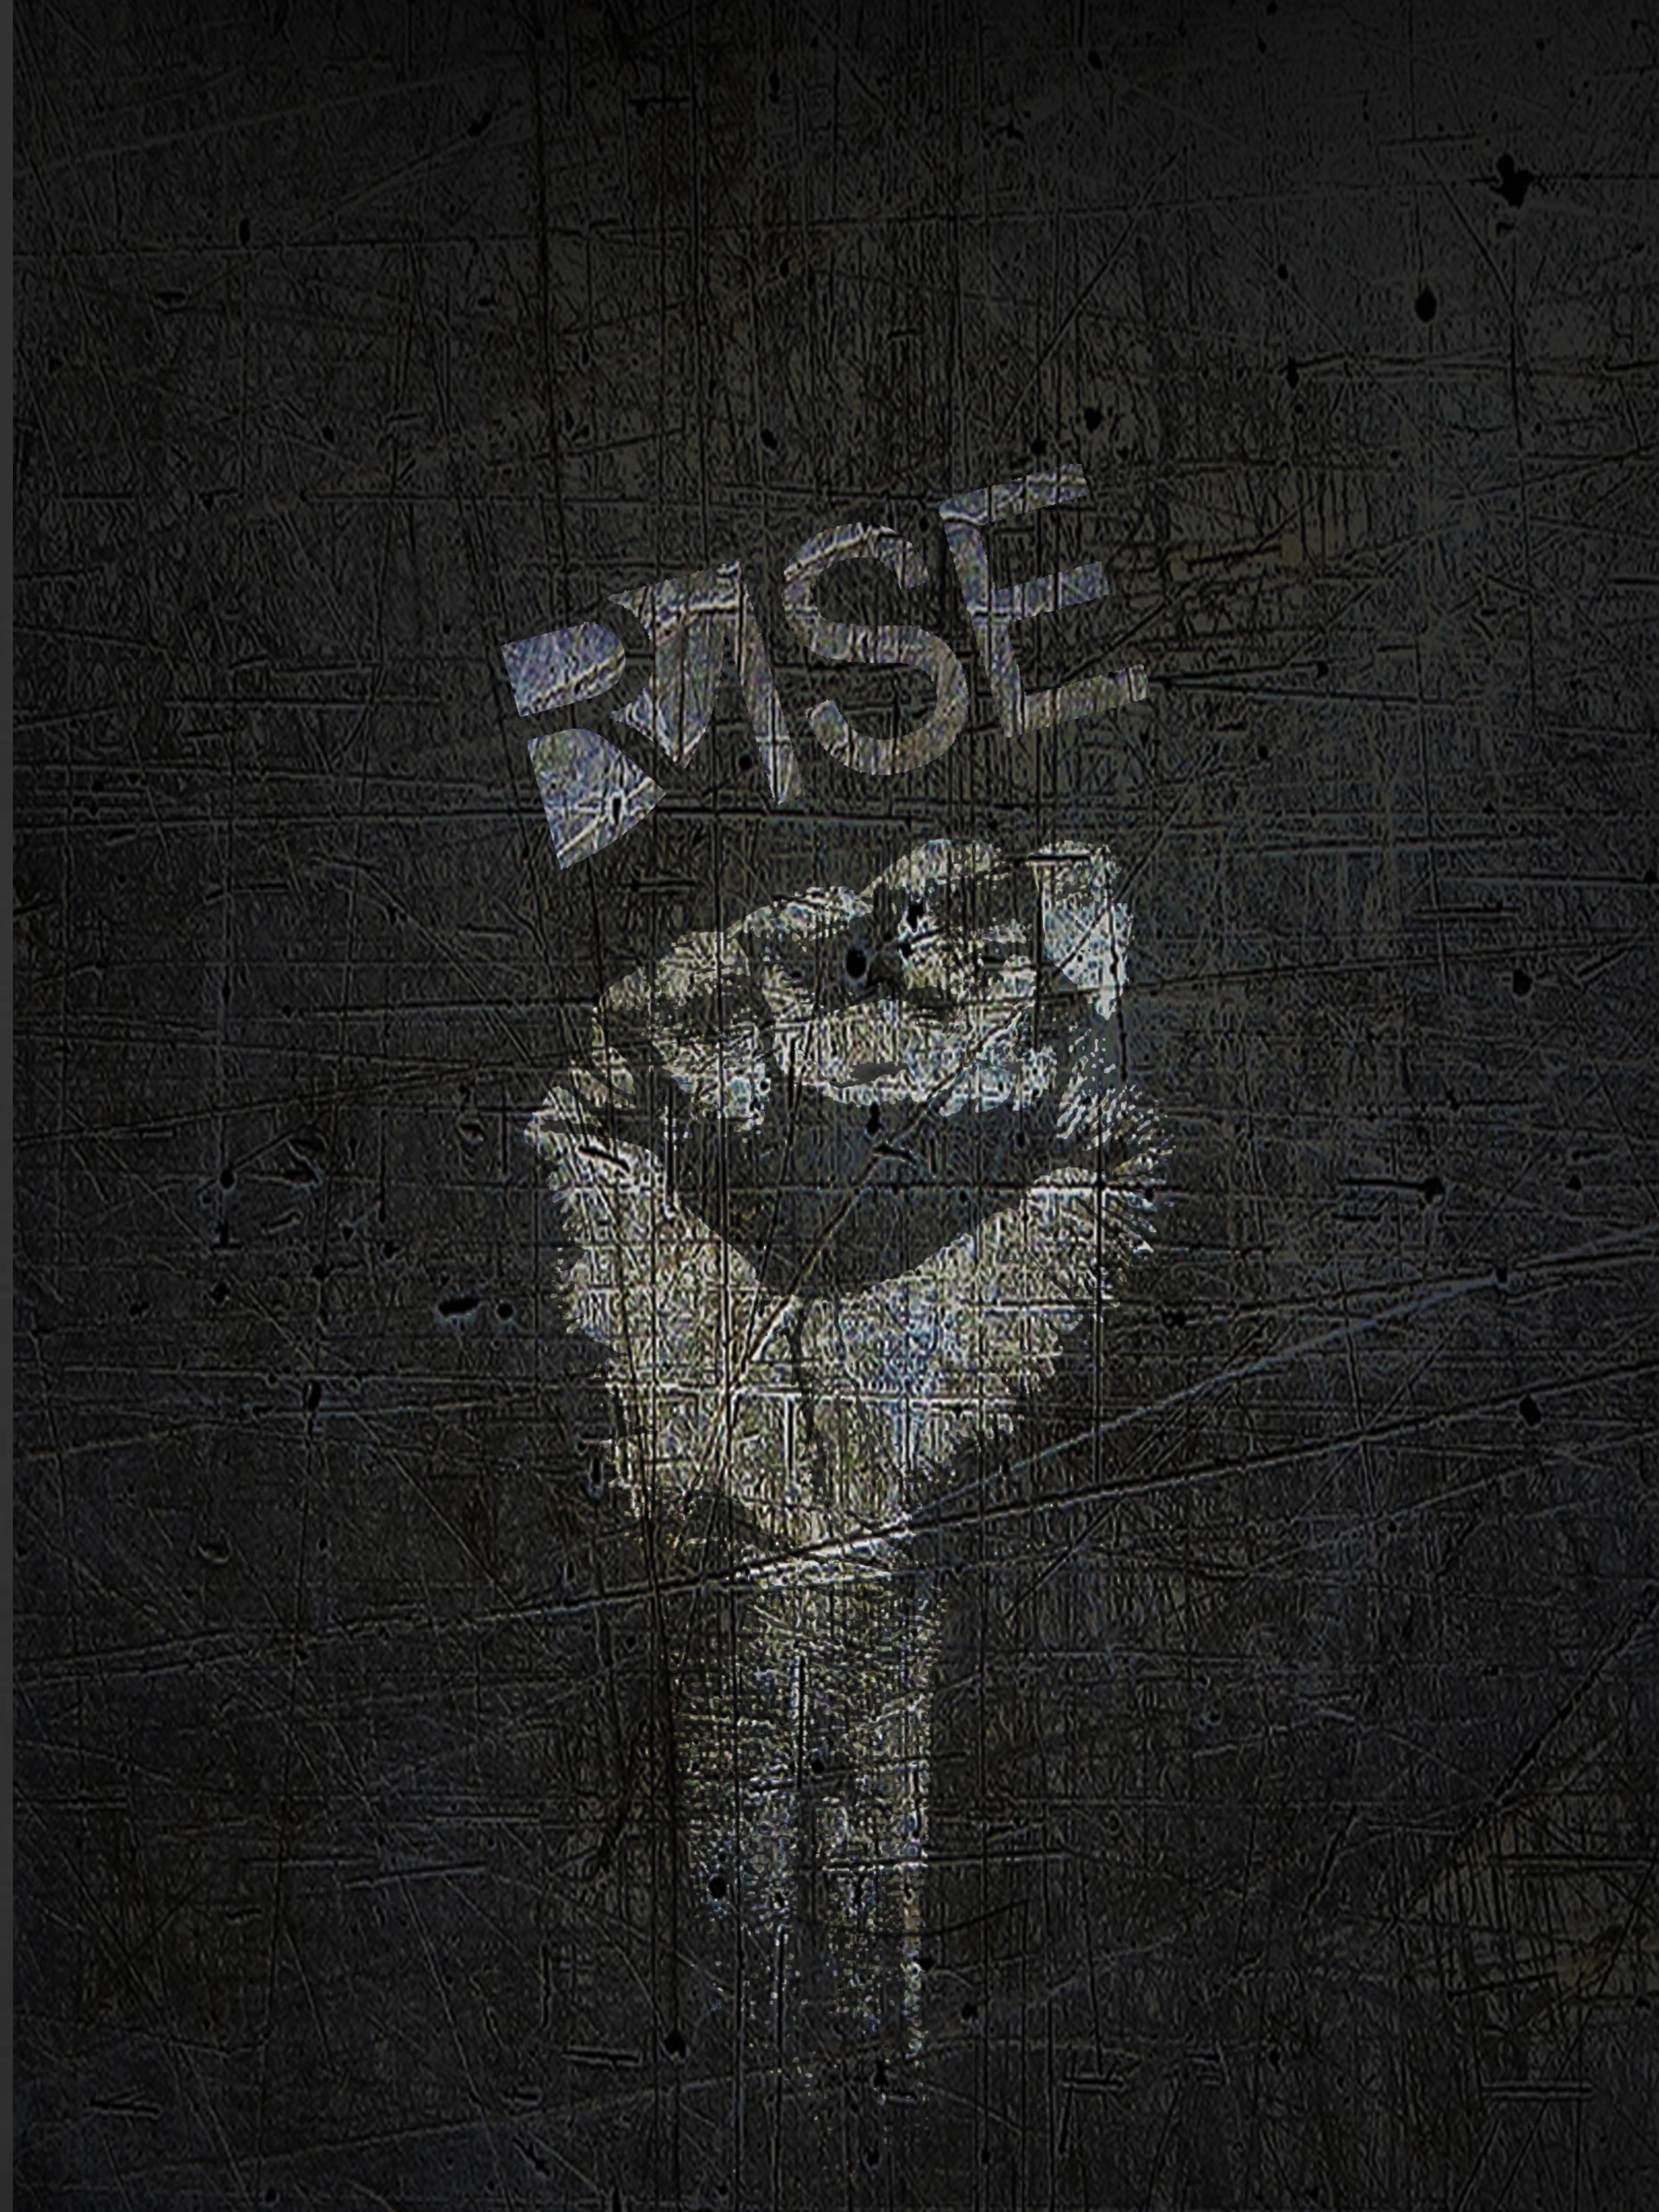 Rise Power, Mixed Media auf Leinwand – Mixed Media Art von Tony Rubino